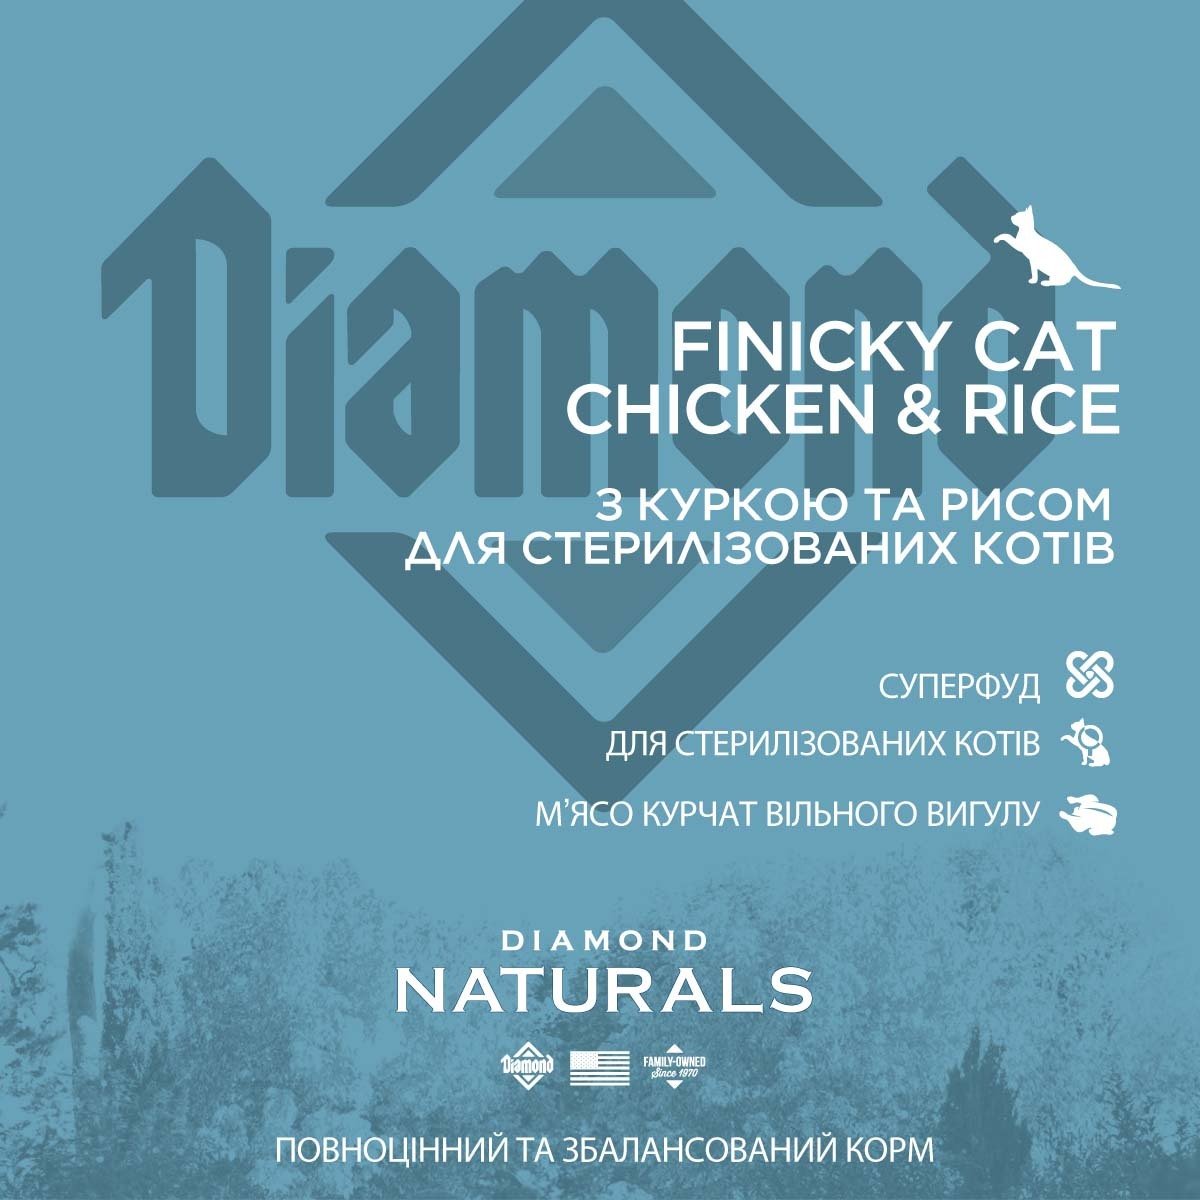 Сухий корм для кішок Diamond Naturals Finicky Cat Chicken&Rice з куркою та рисом 3 кгфото4